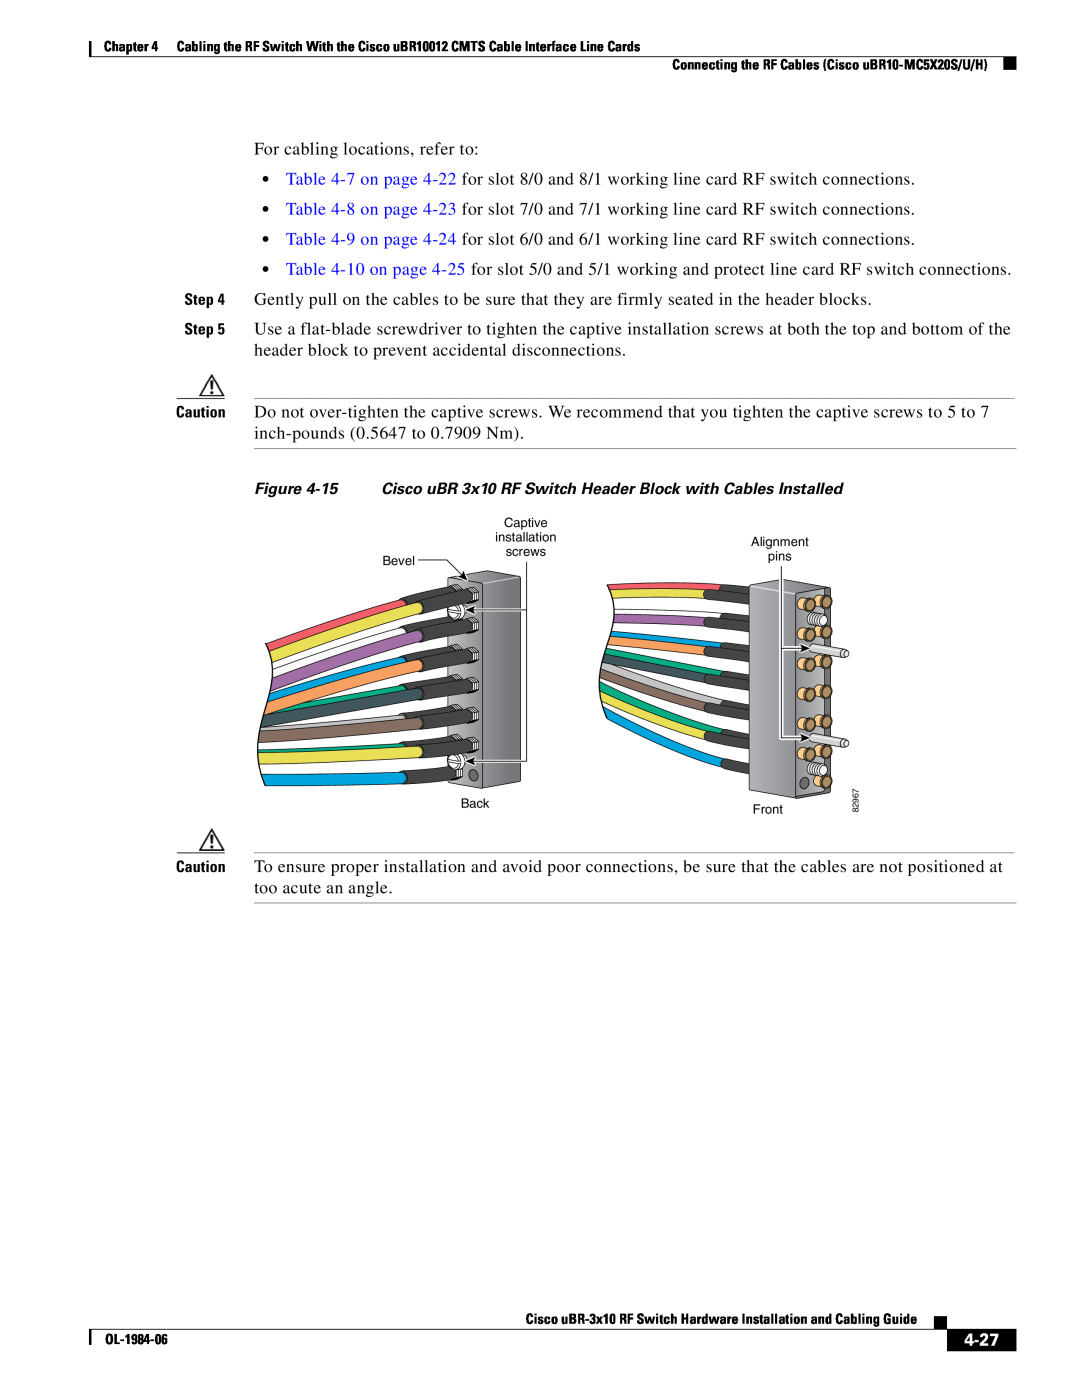 Cisco Systems UBR-3X10 manual 4-27, screws, Bevel, Back, Front, Captive, installation, Alignment, pins 